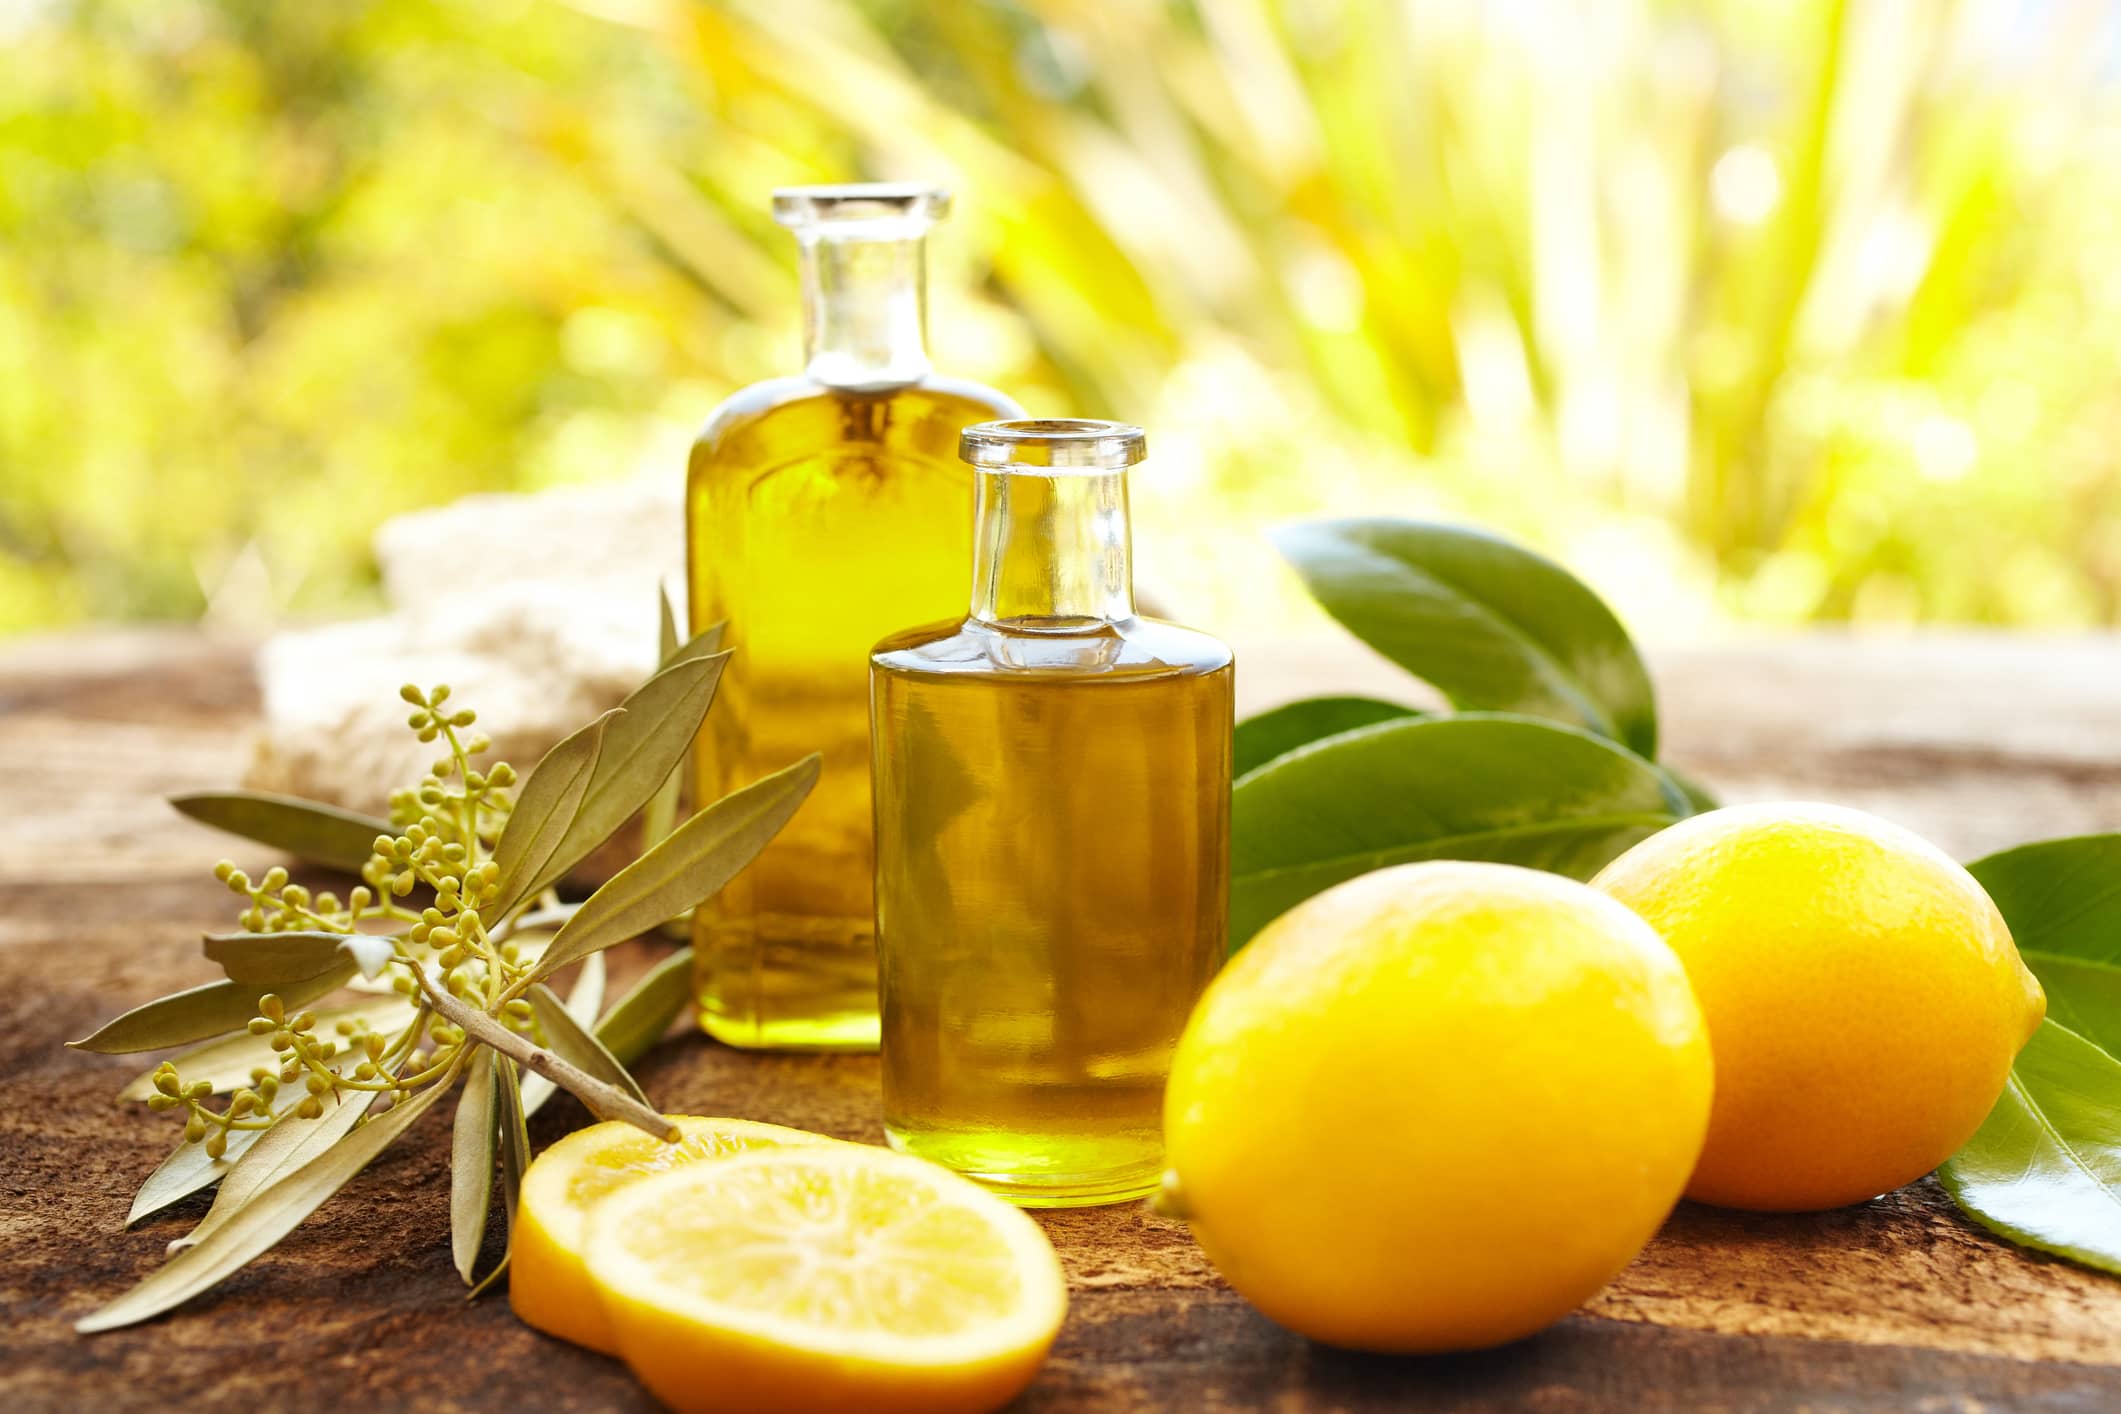 Massage oil bottles at a spa with lemons and lemon essential oils.